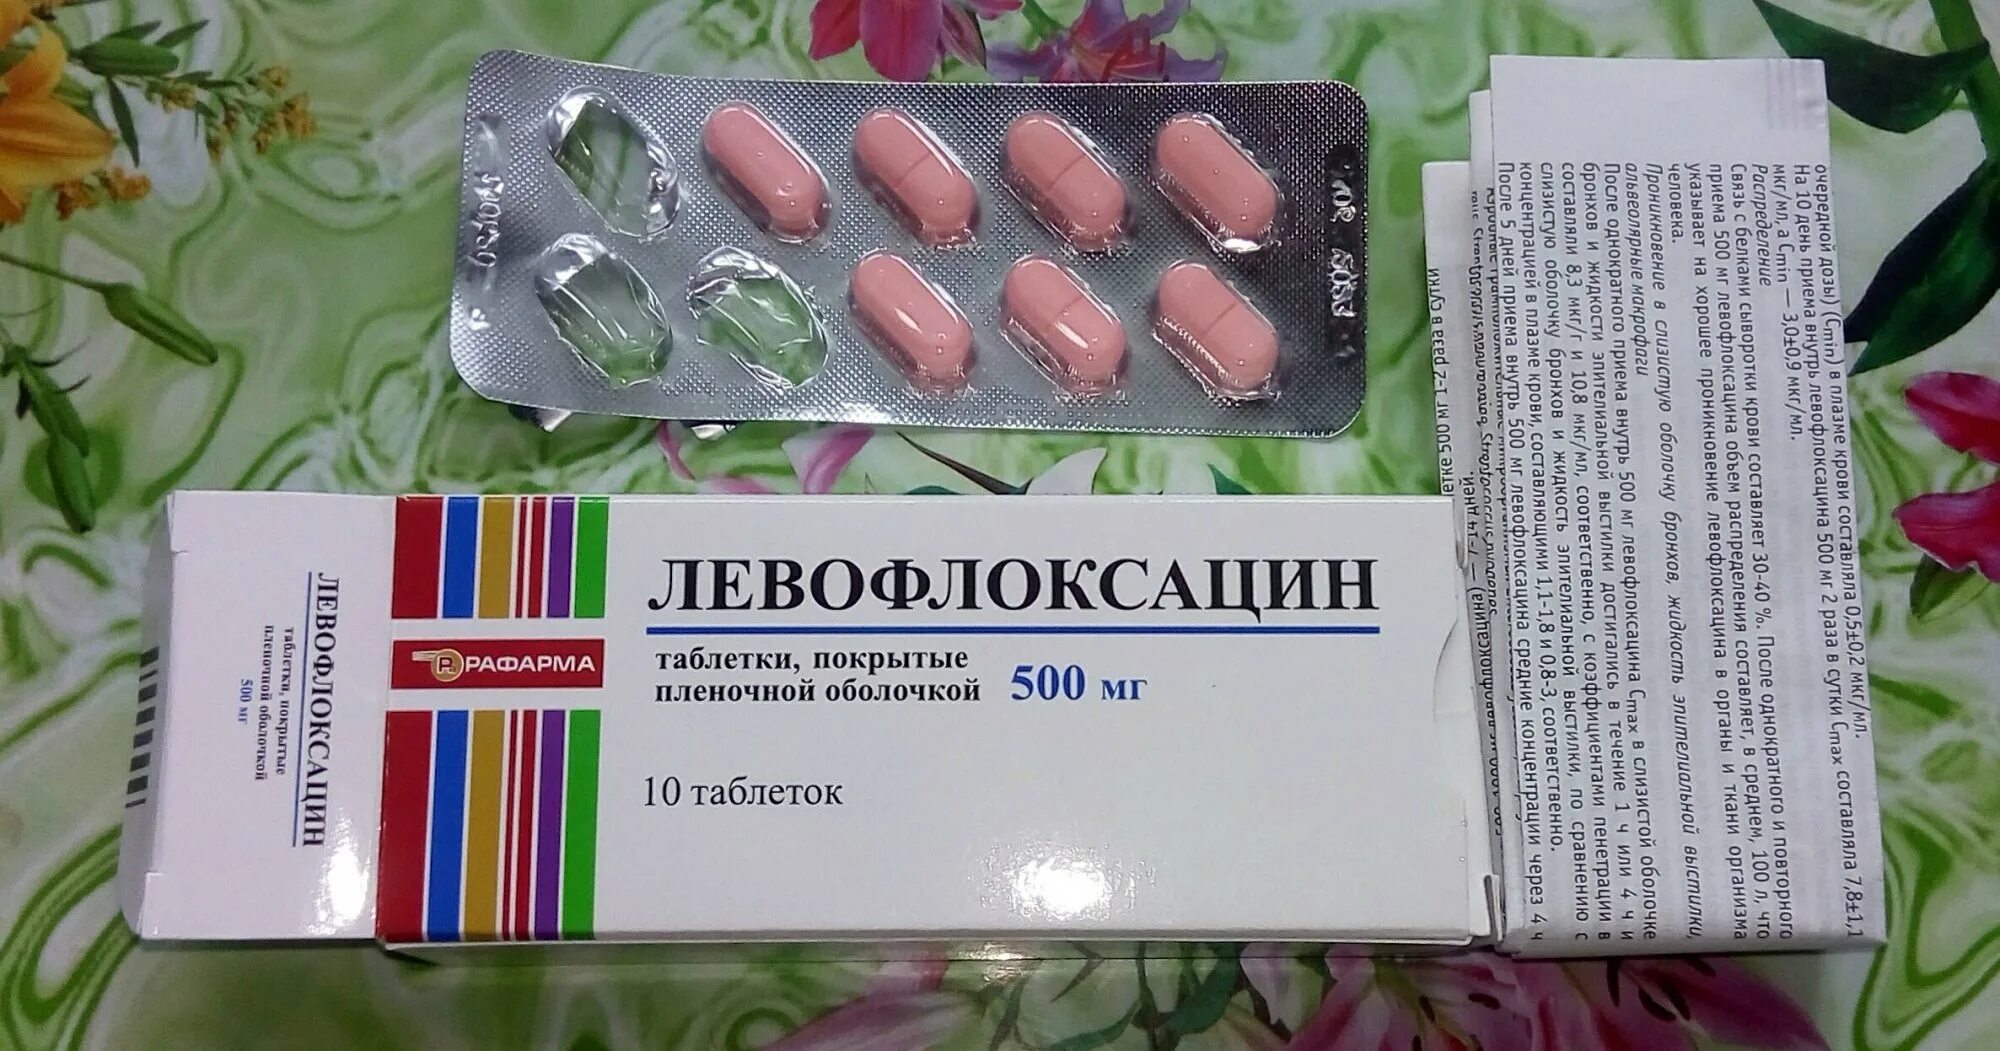 Левофлоксацин 500 мг. Табл Левофлоксацин 500мг. Левофлоксацин 500 капсулы. Противомикробное лекарство Левофлоксацин.